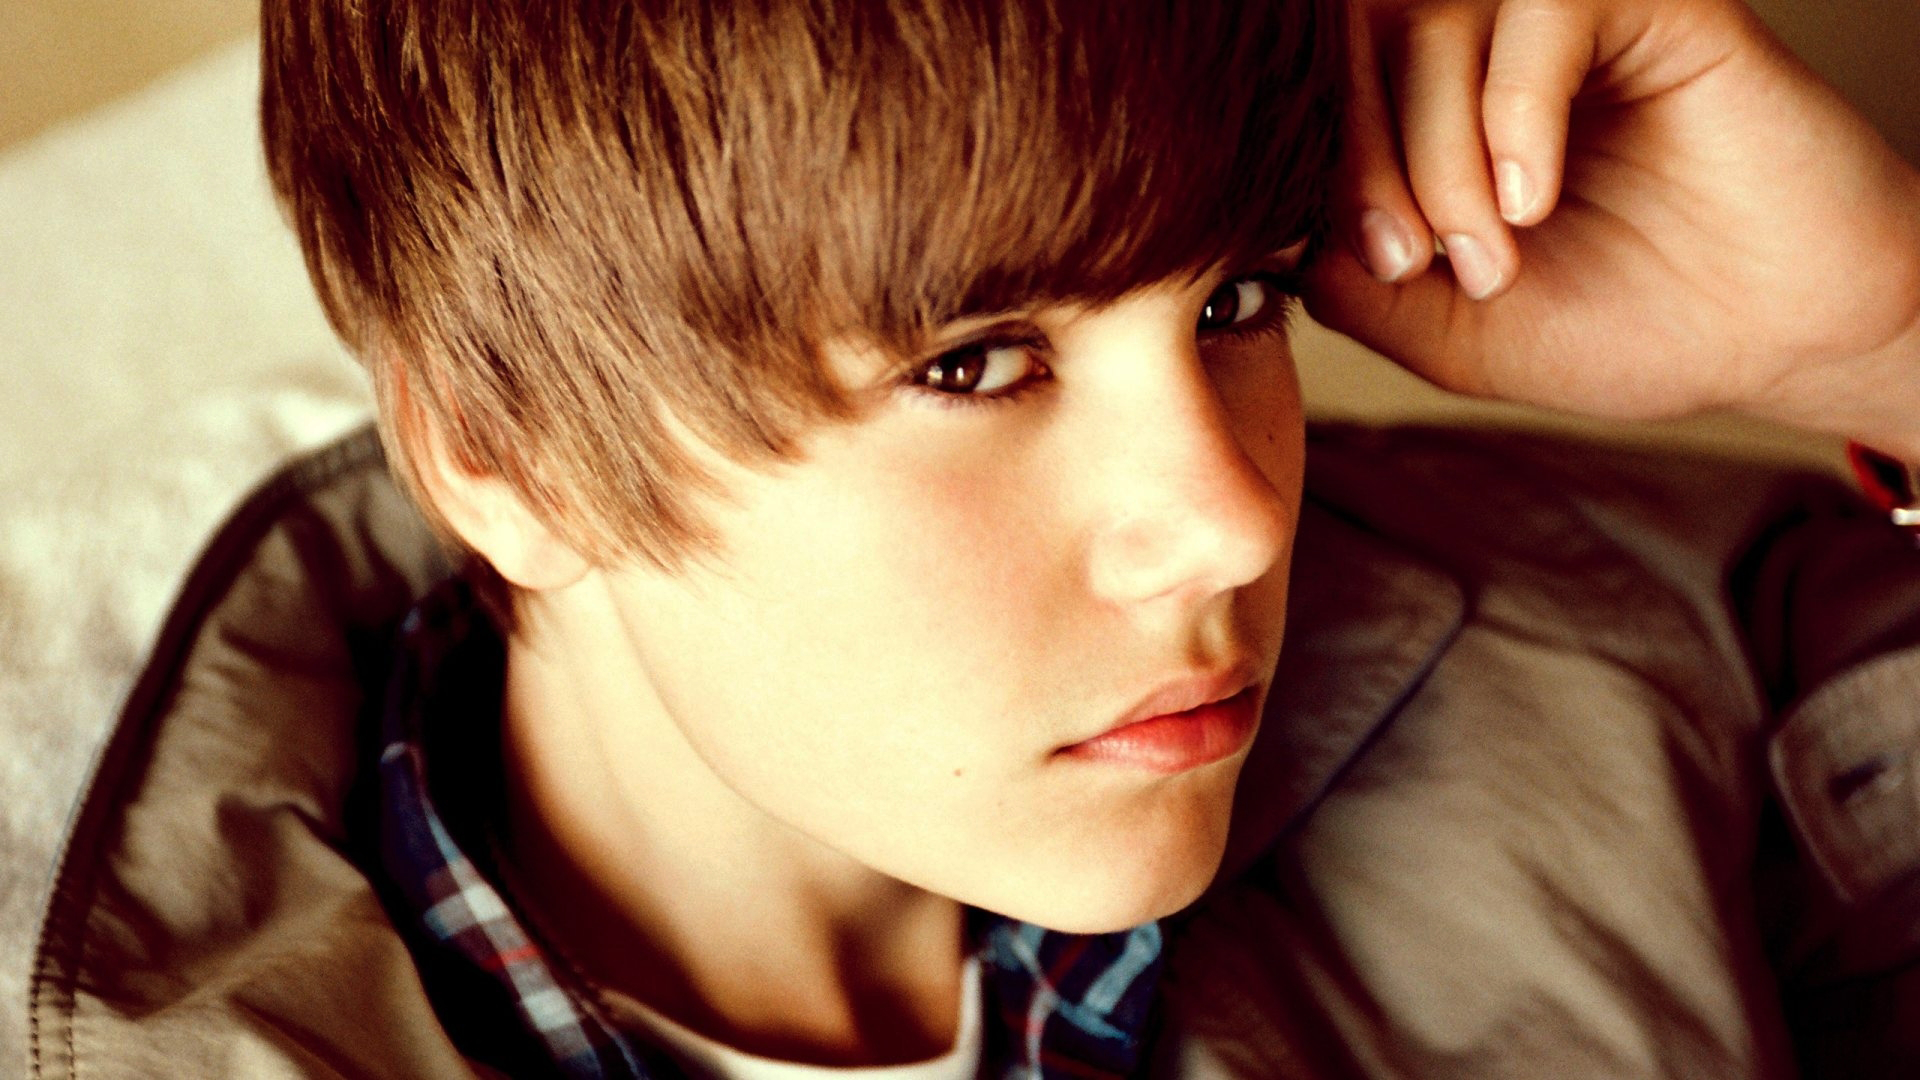 Music Justin Bieber HD Wallpaper | Background Image